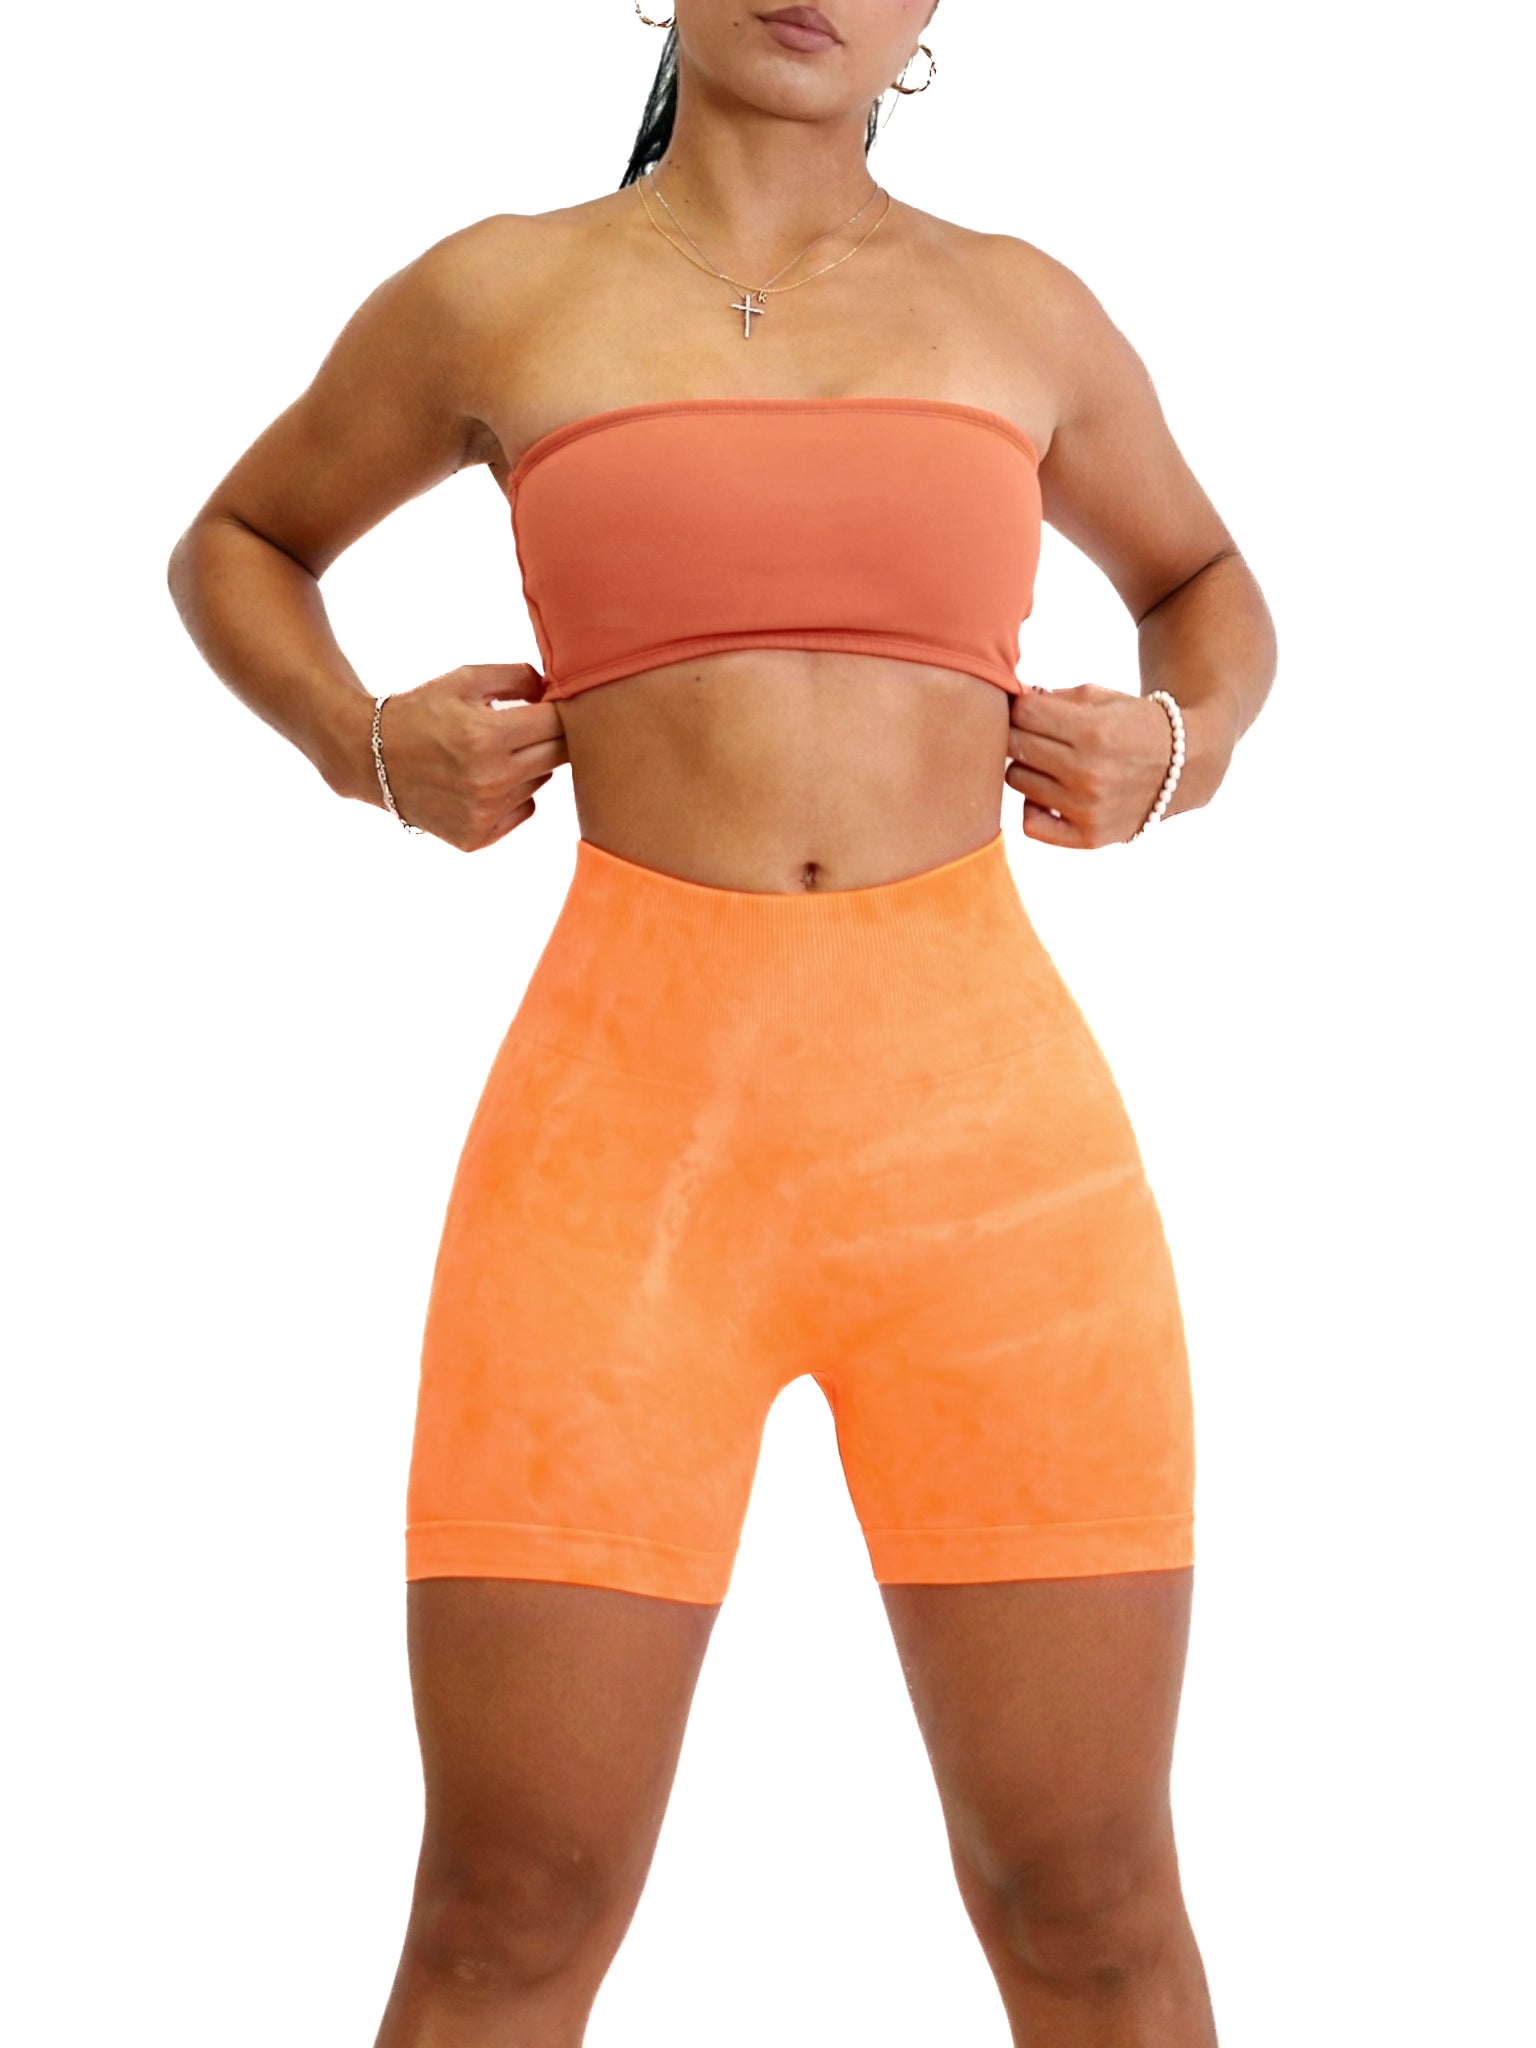 Tube Top Sports Bra (Burnt Orange) – Fitness Fashioness